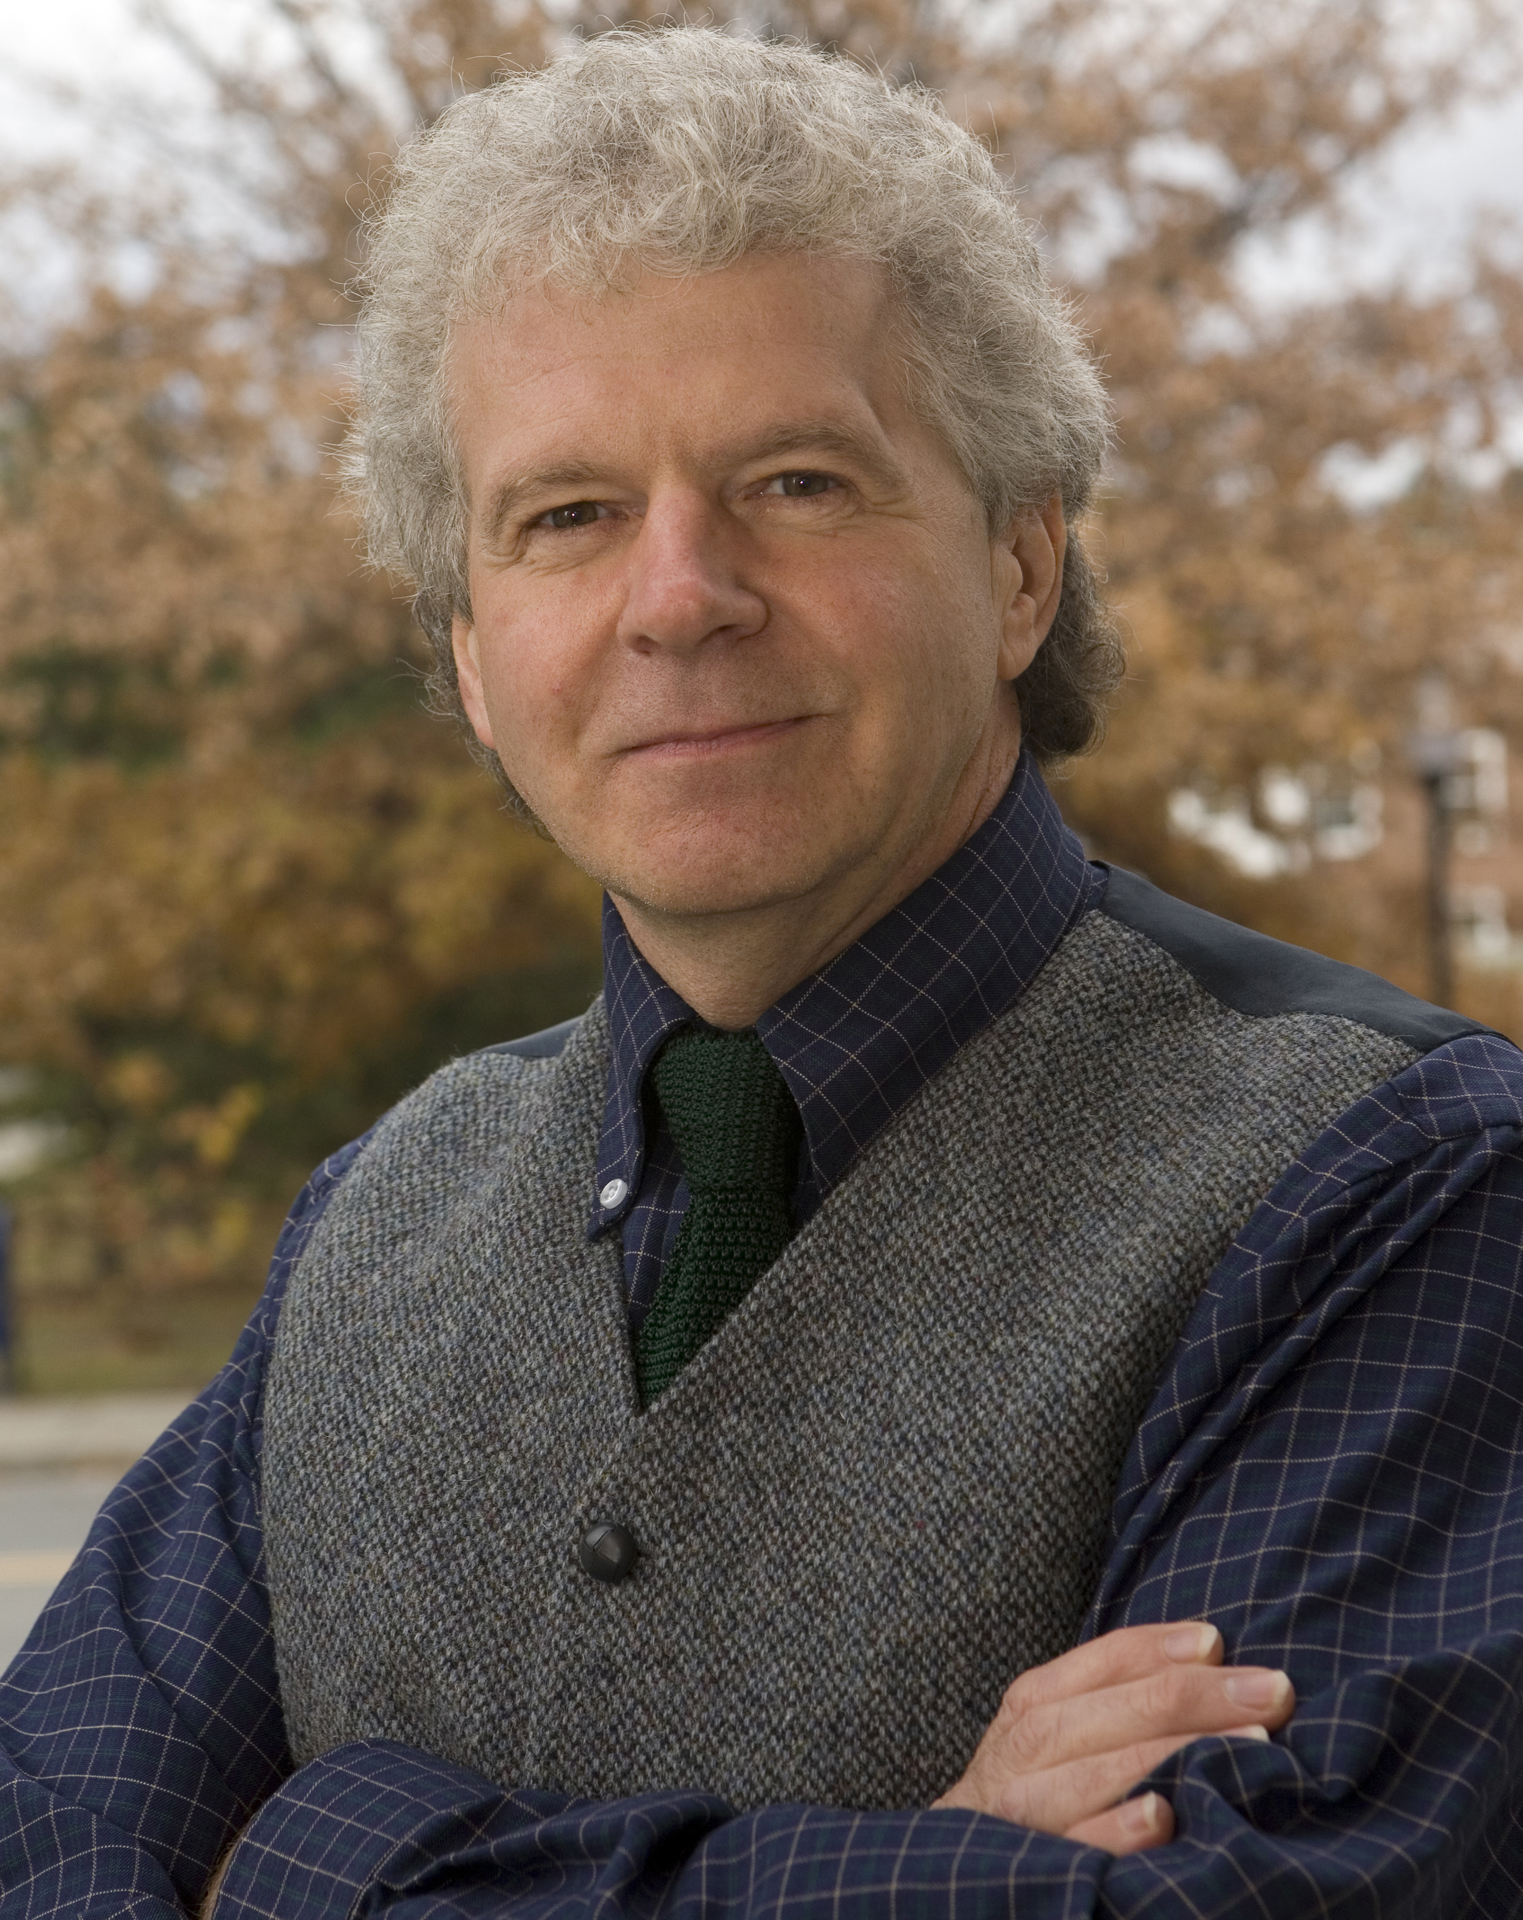 Professor Colin Calloway, winner of the 2019 George Washington Prize